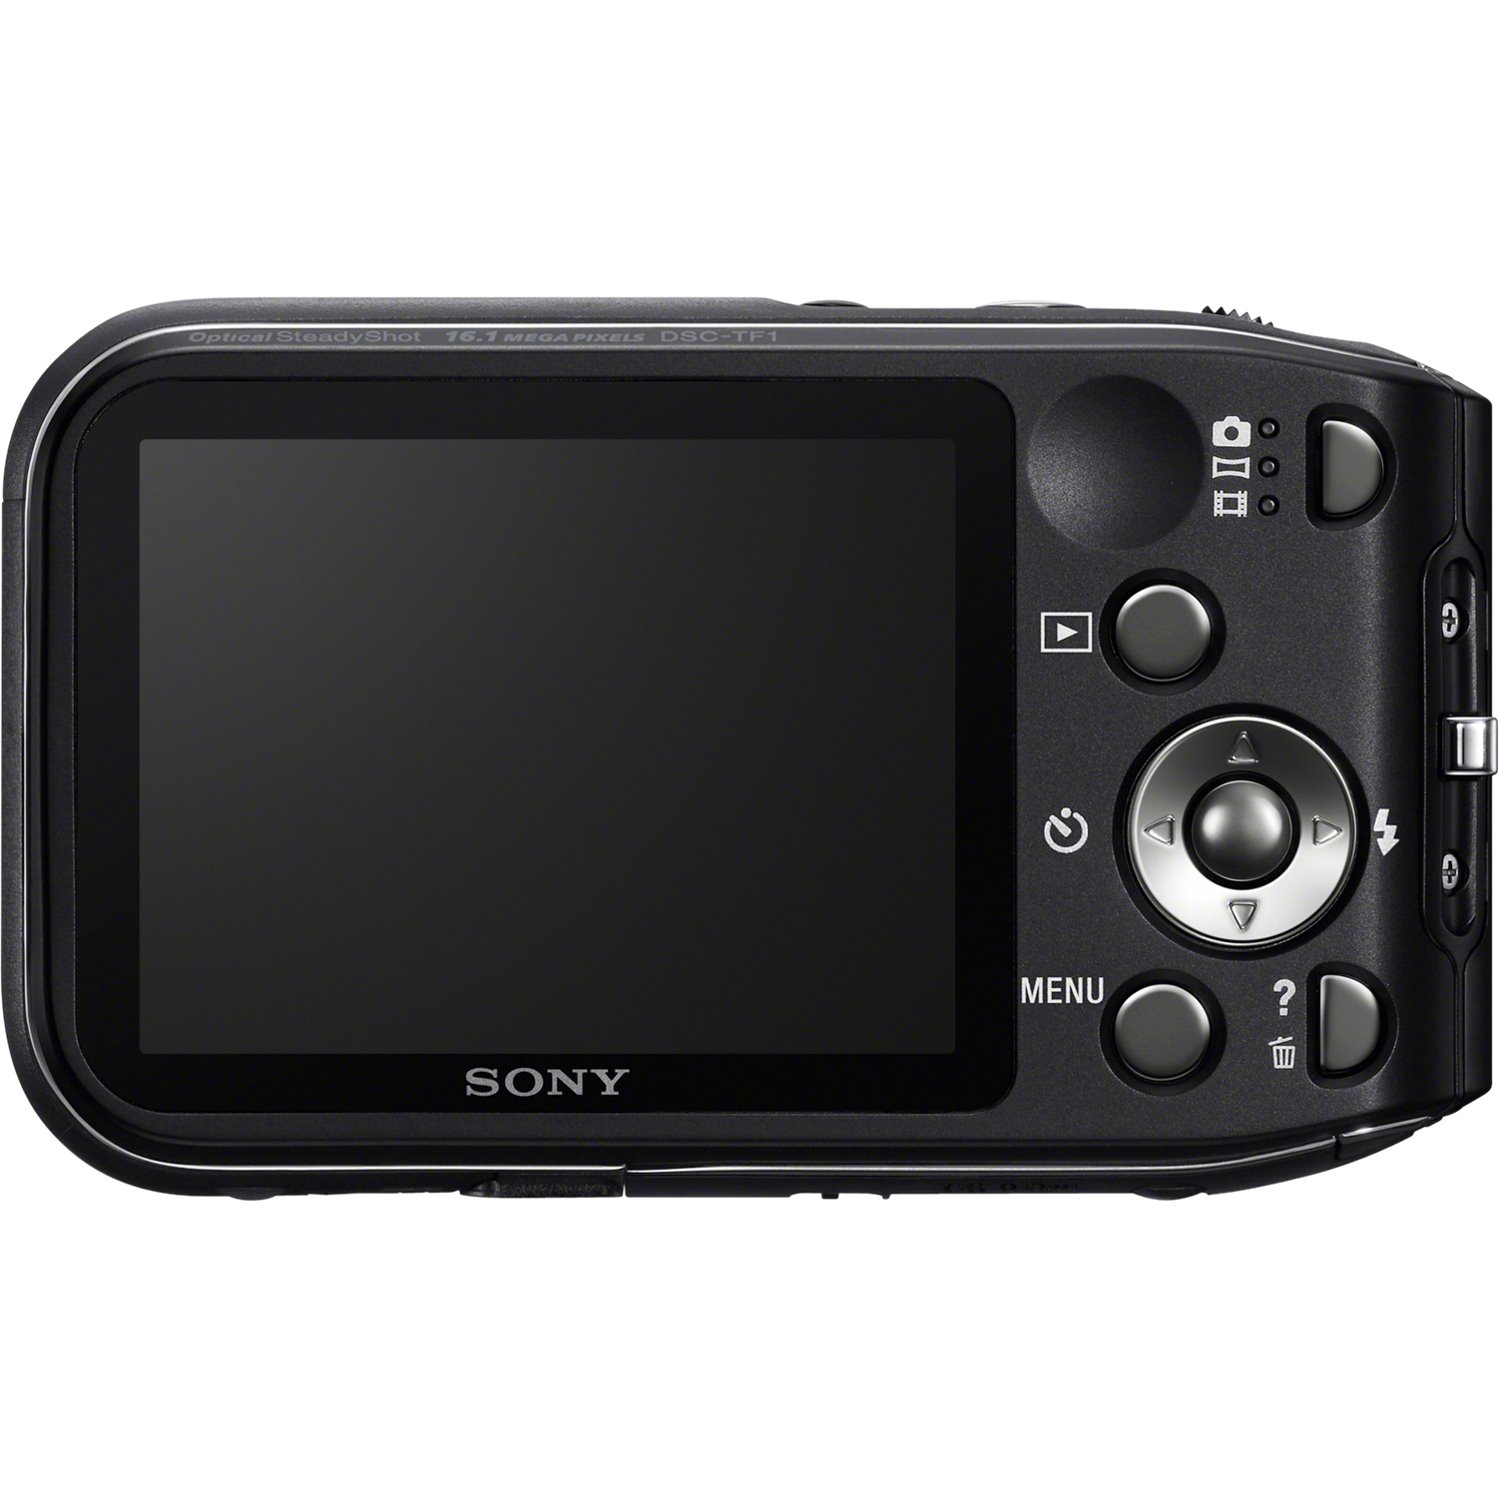 Sony Cyber-shot DSC-TF1 16.1 Megapixel Compact Camera - Black